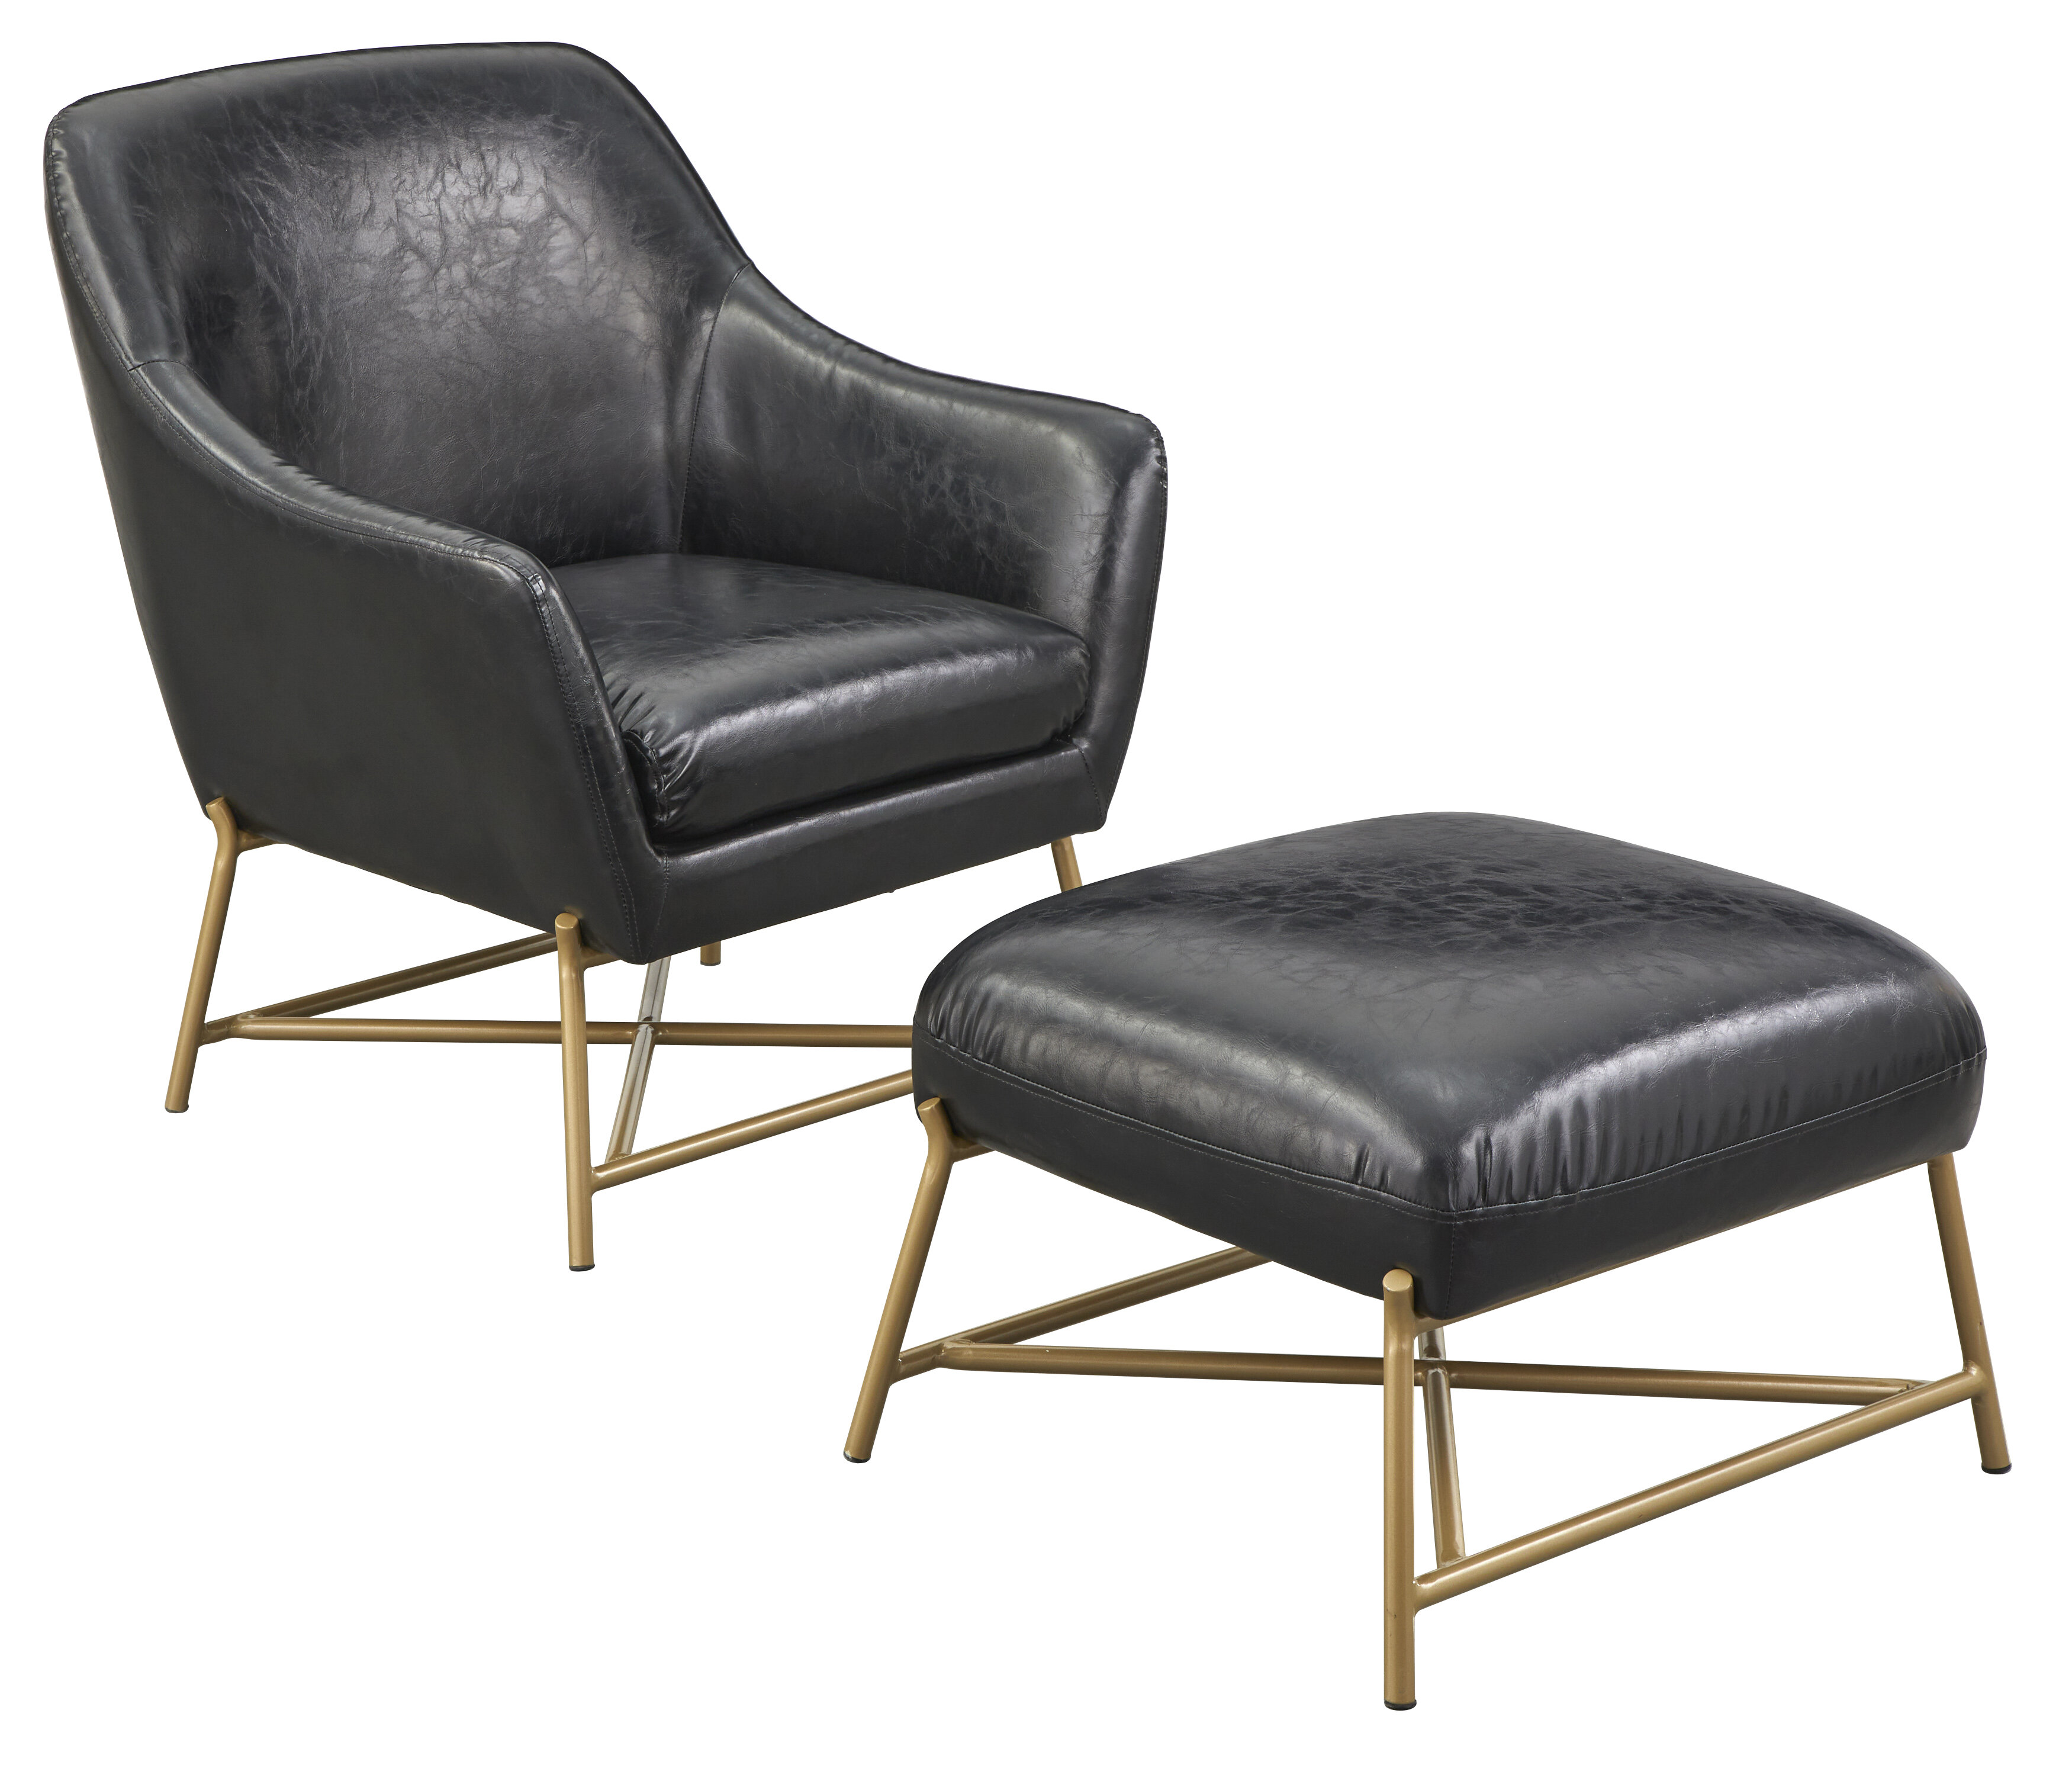 Everly Quinn Minford 303 Wide Lounge Chair And Ottoman Wayfair